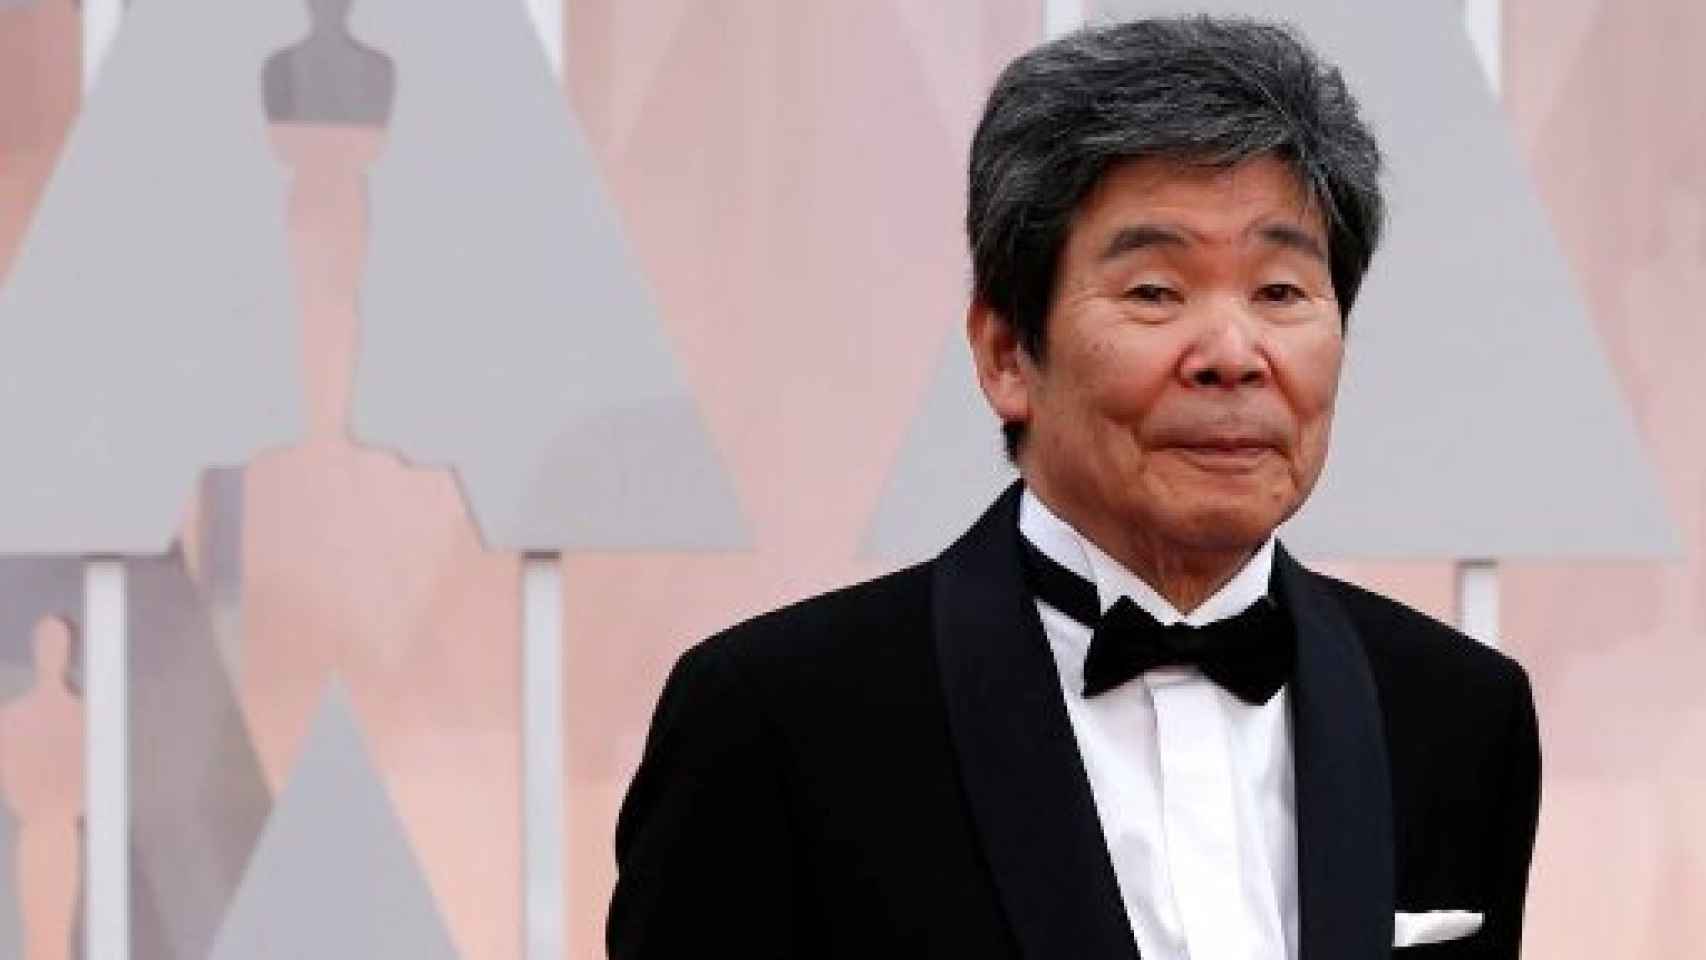 Image: Fallece el cineasta japonés Isao Takahata